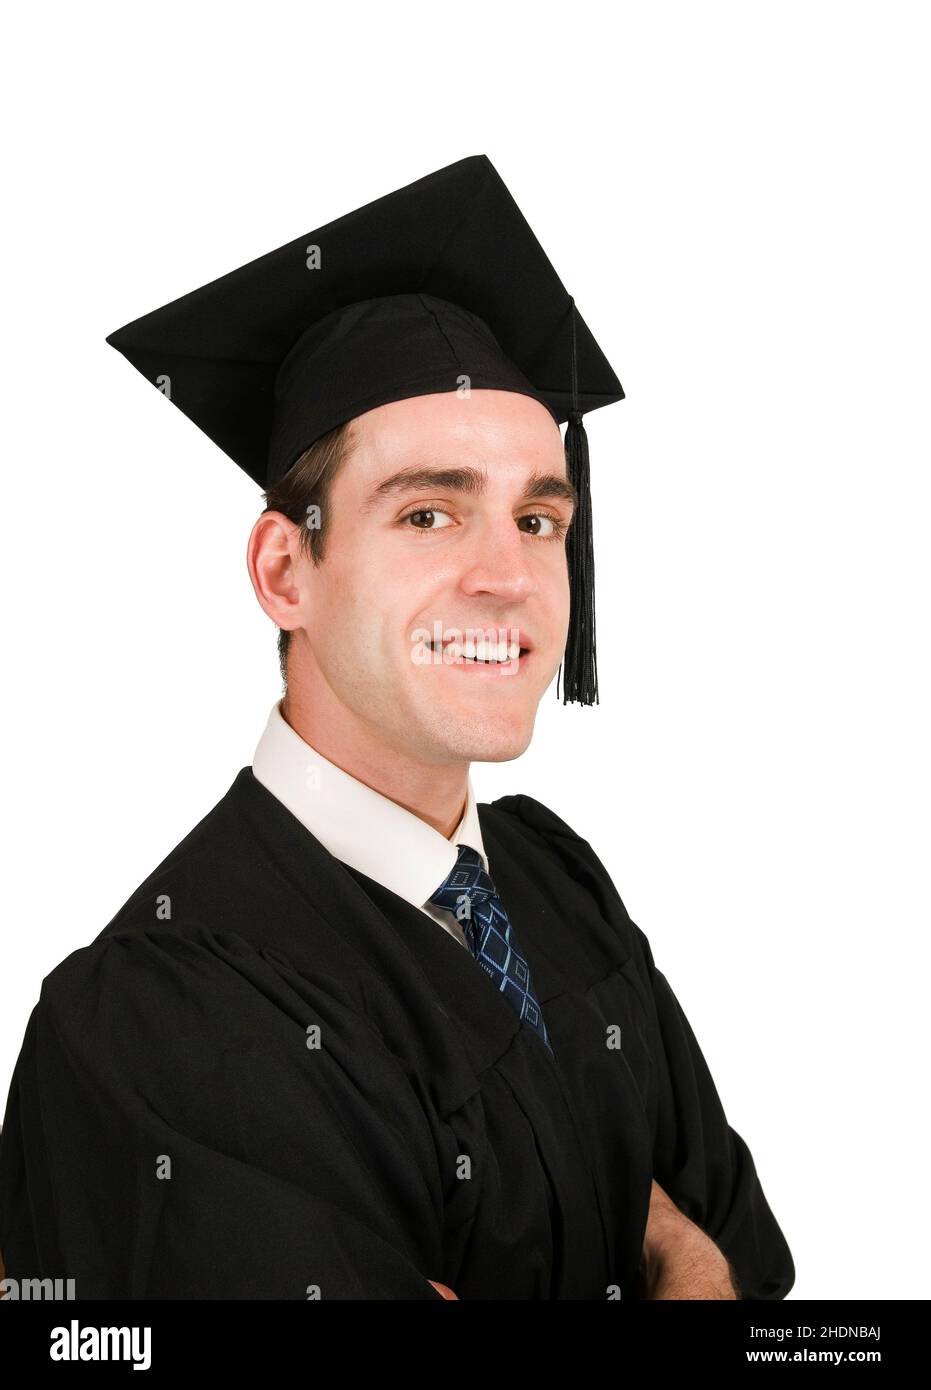 doctoral cap, diploma holder, alumnus, degree holder, graduate Stock Photo